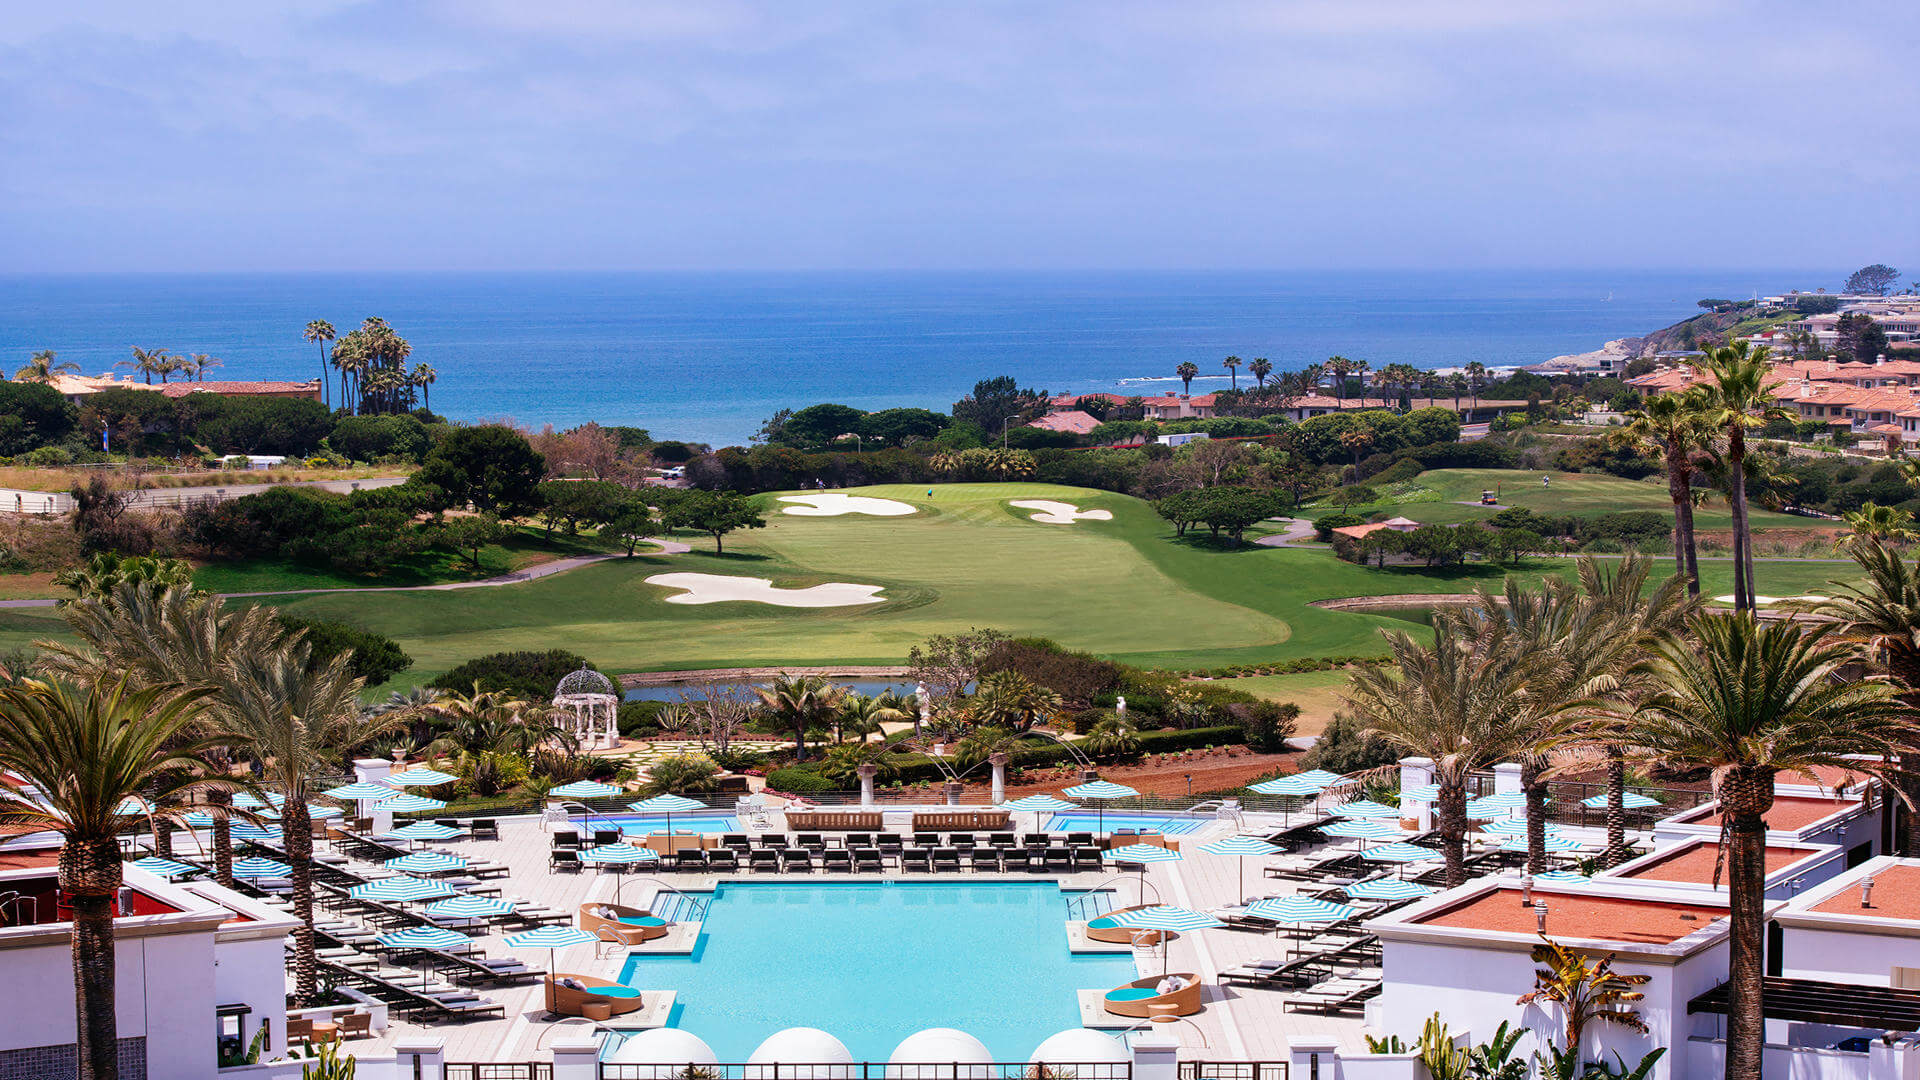 Resort pool overlooking golf course and Pacific Ocean